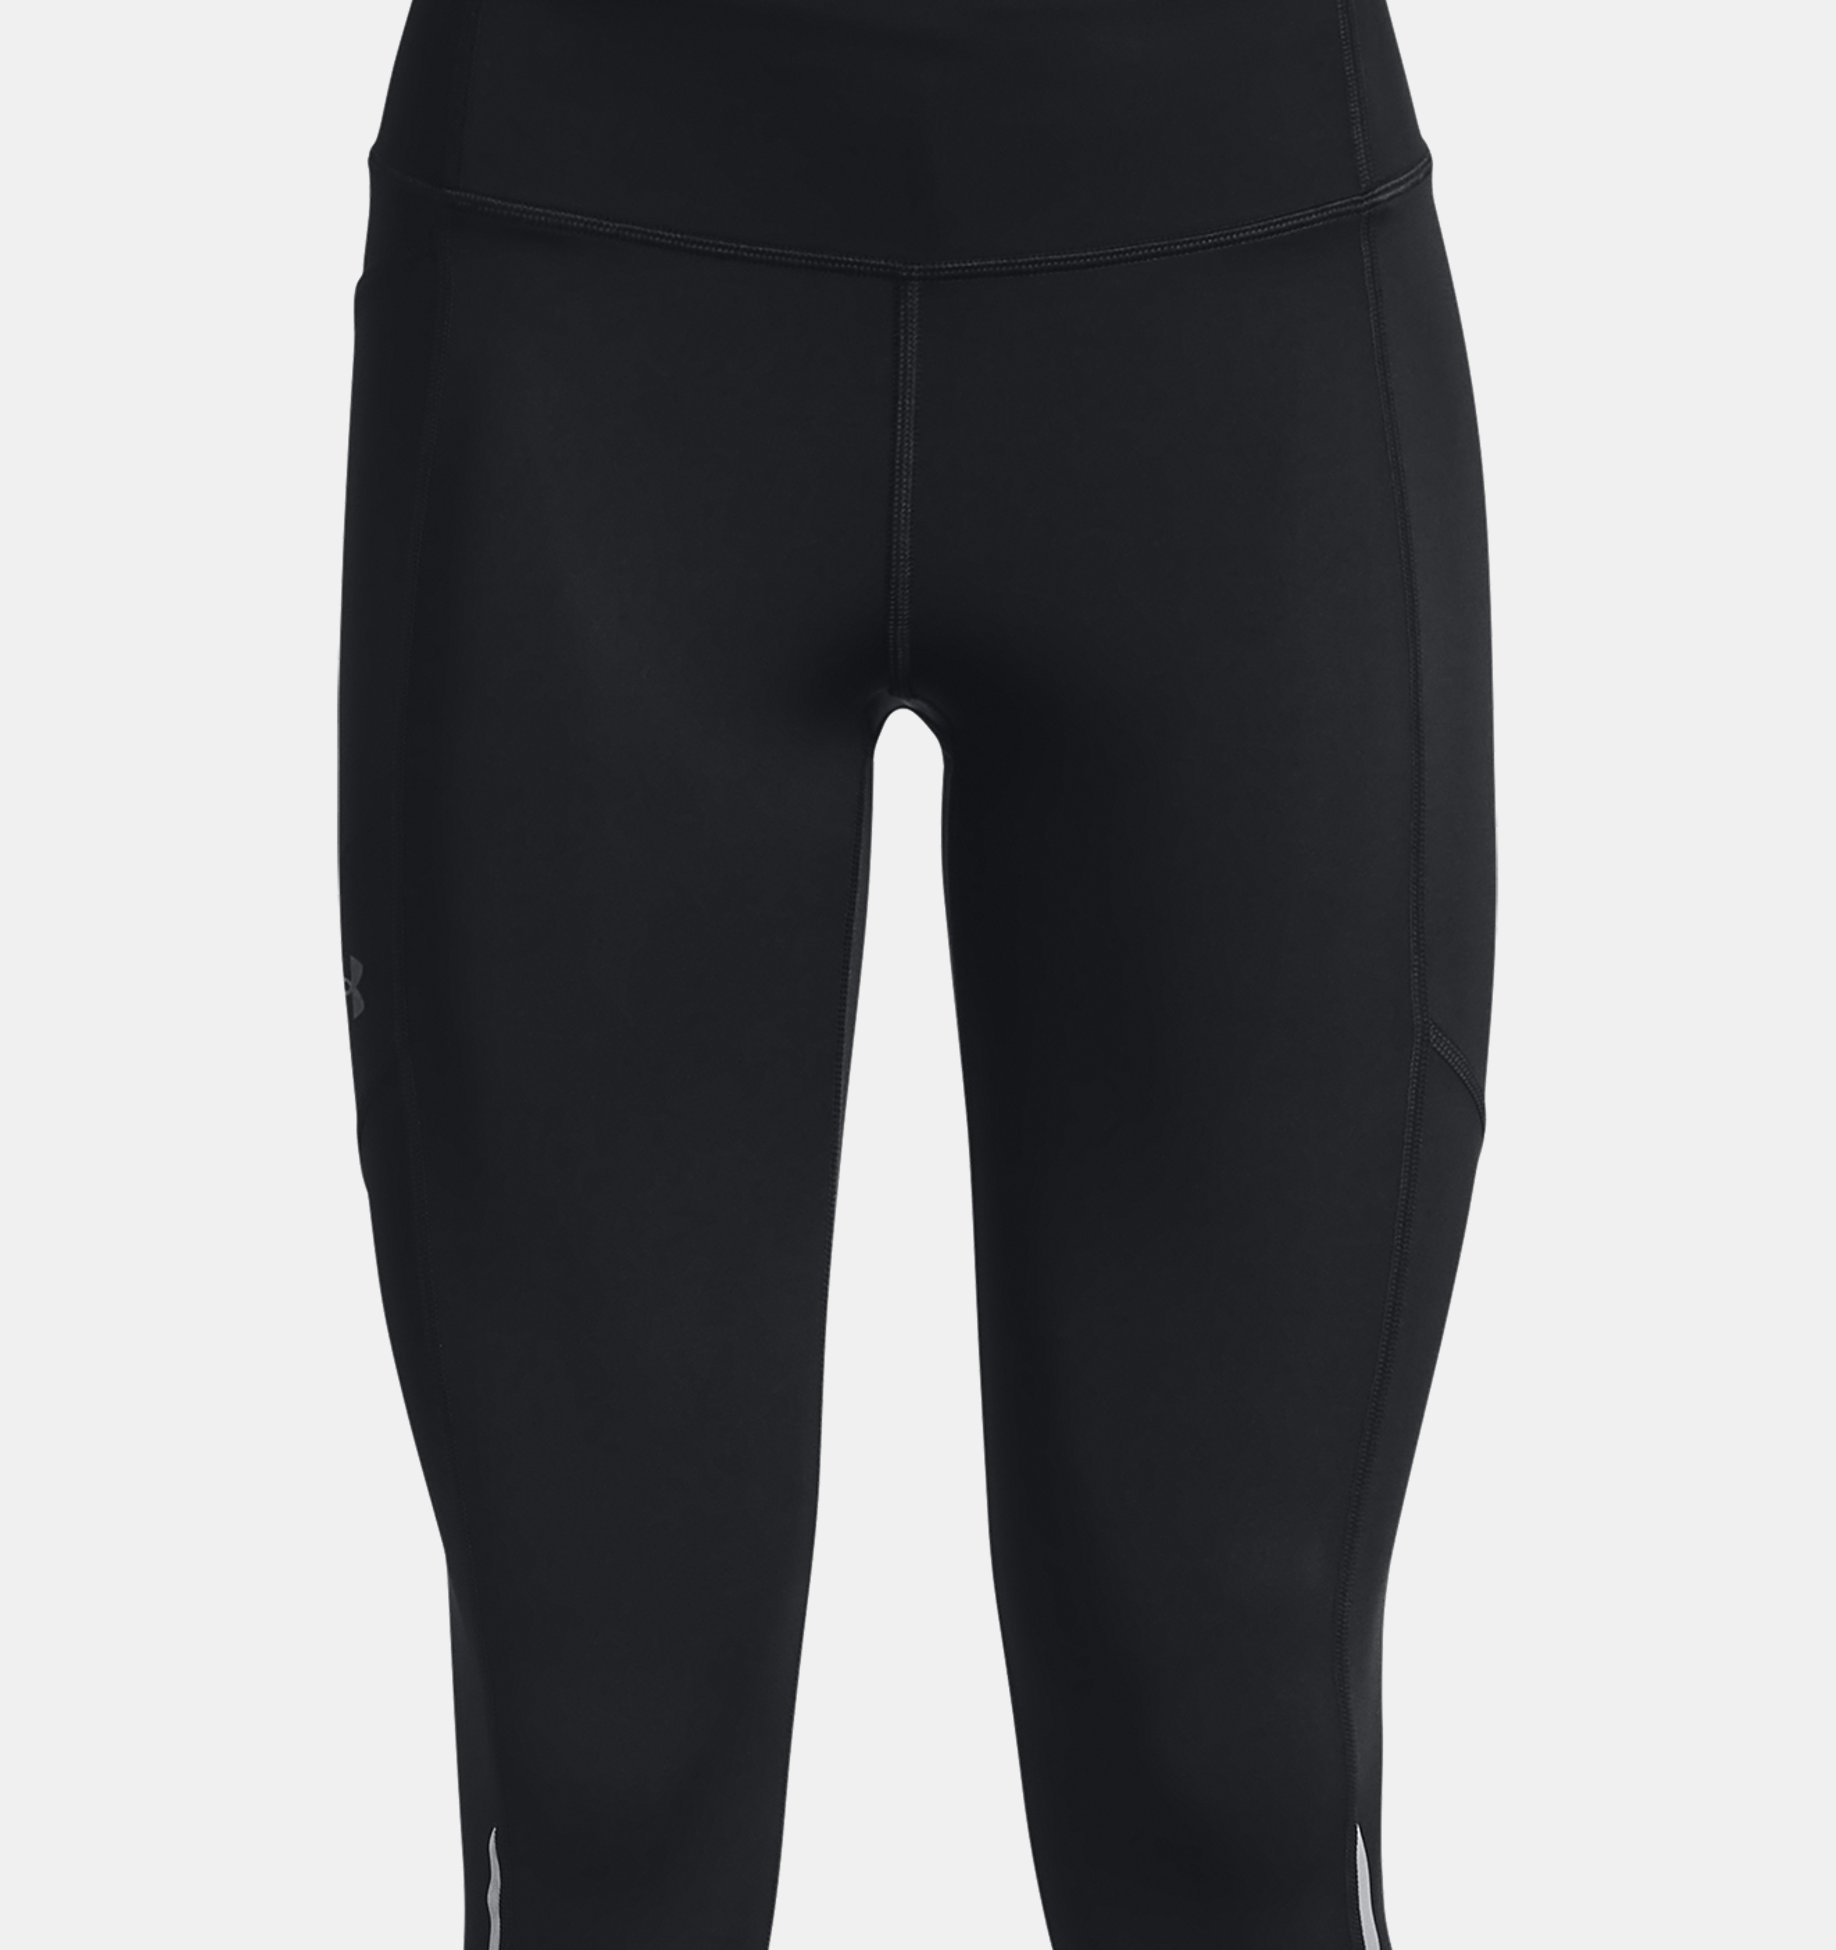 Under Armour women's large black athletic capri pants - $11 - From Megan